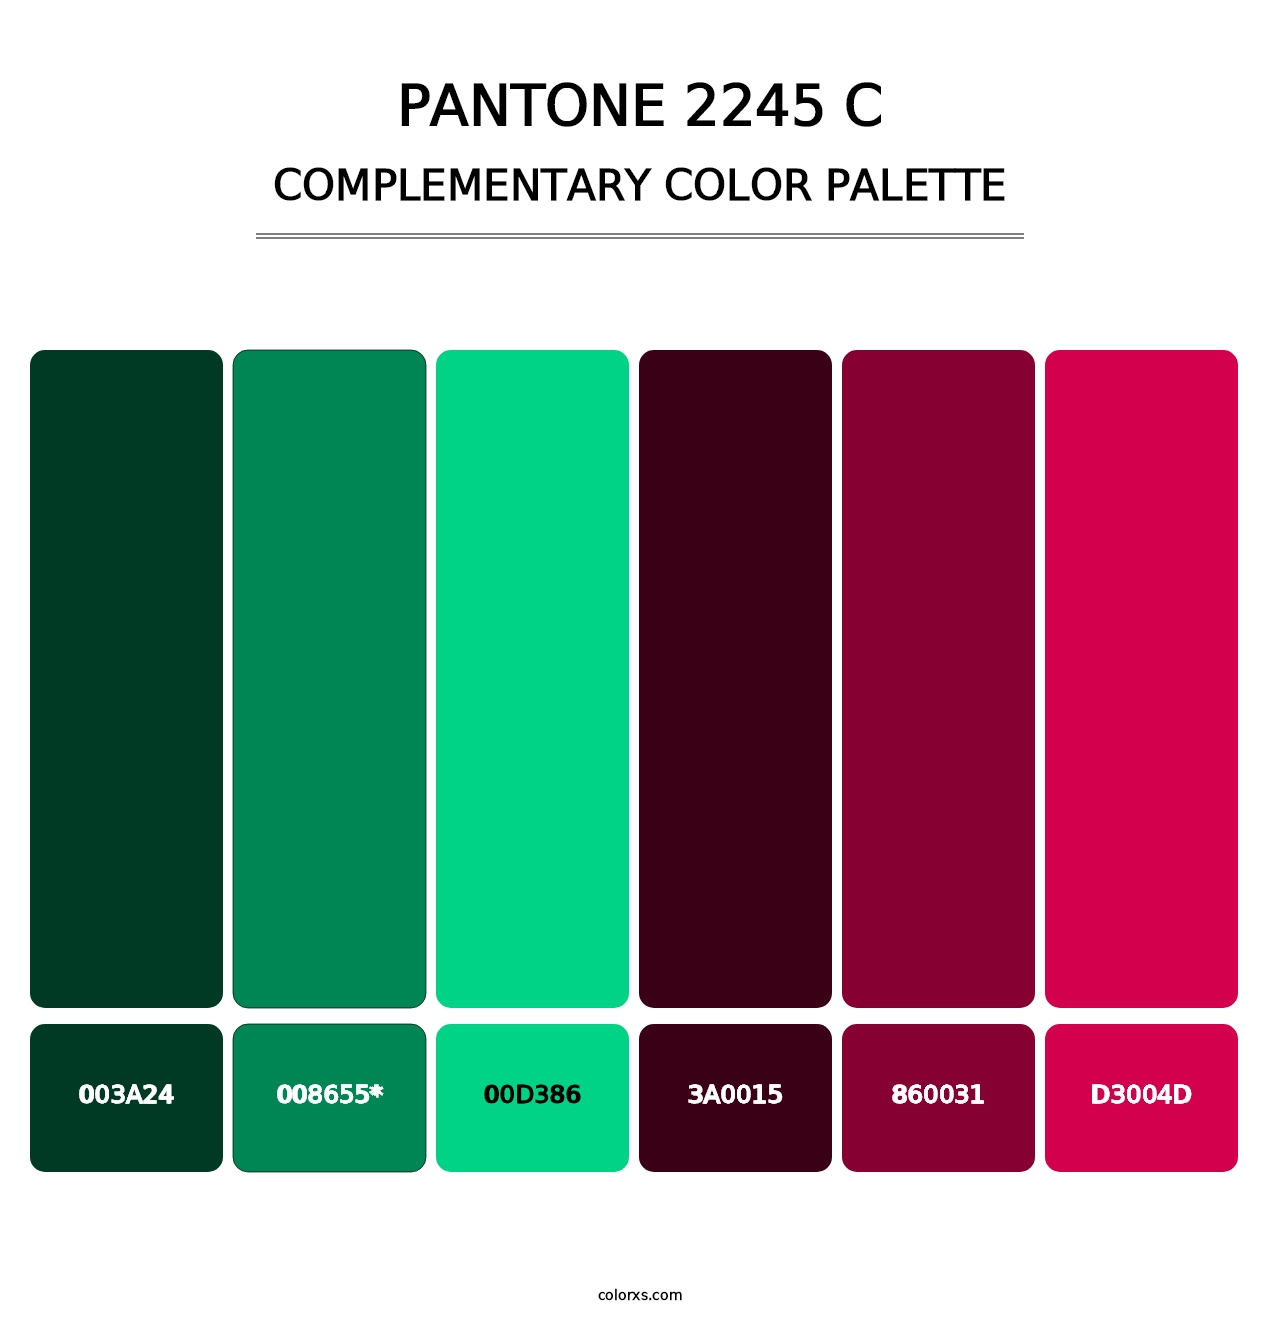 PANTONE 2245 C - Complementary Color Palette